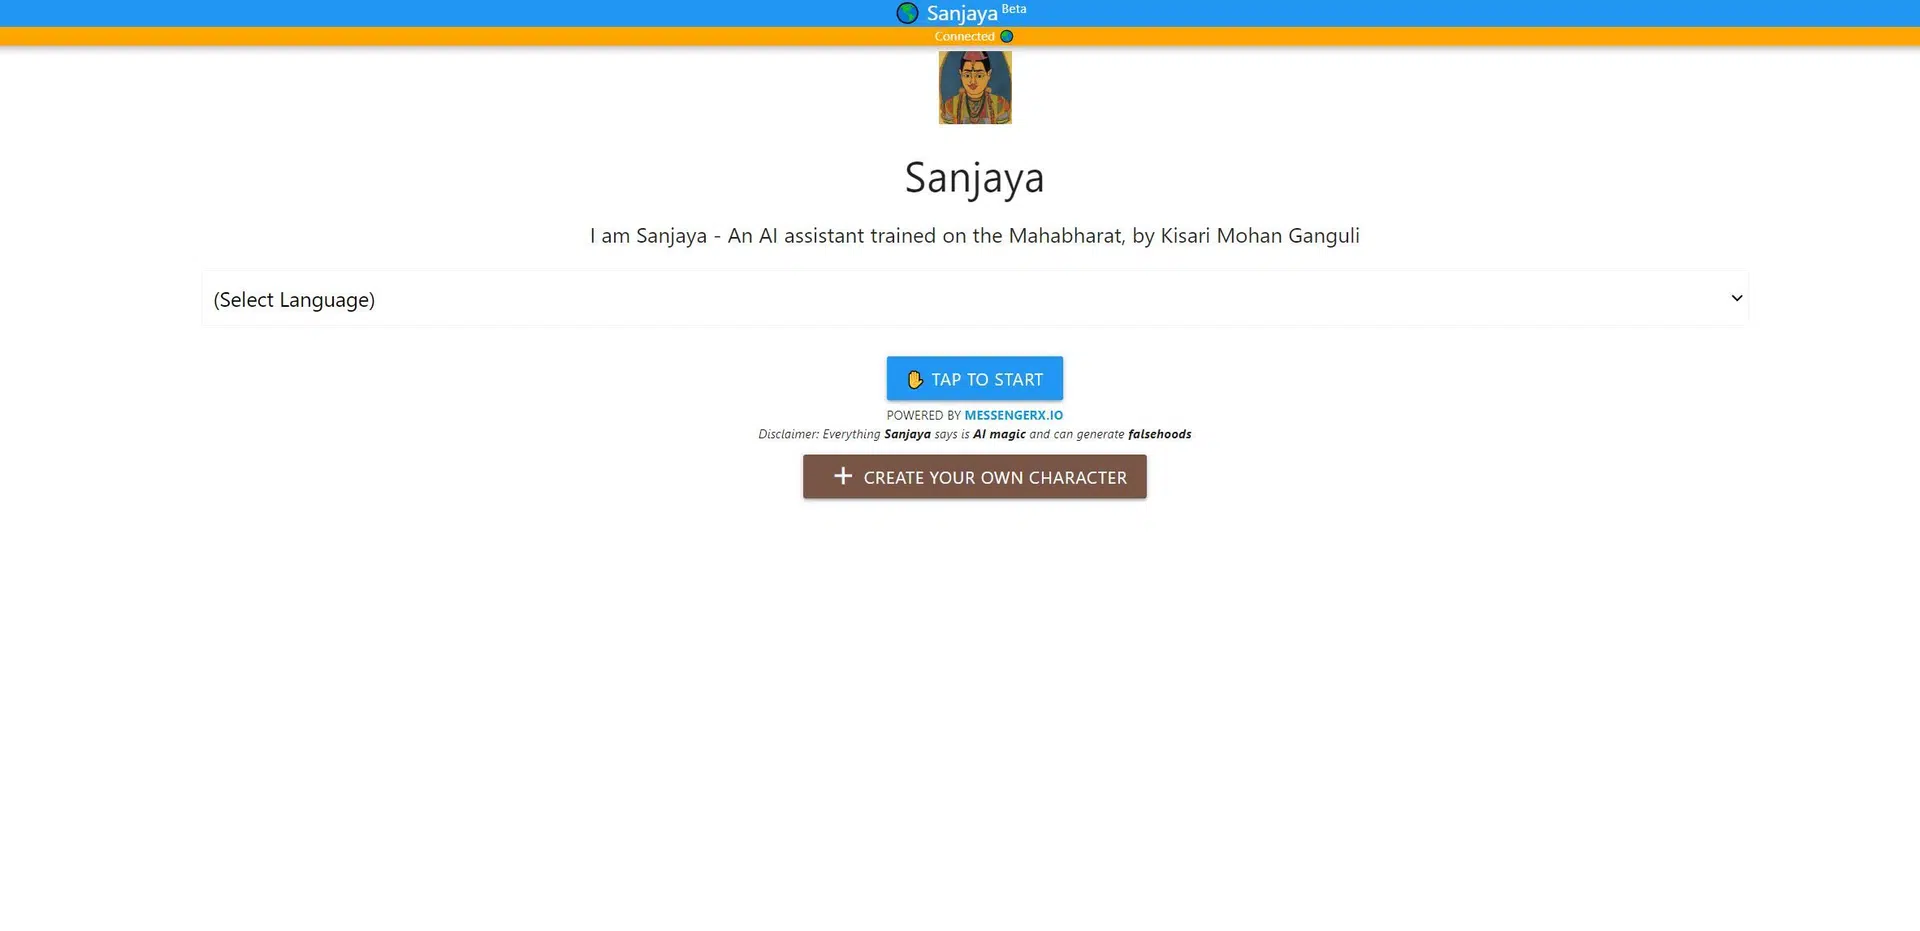 Sanjaya chatbotwebsite picture